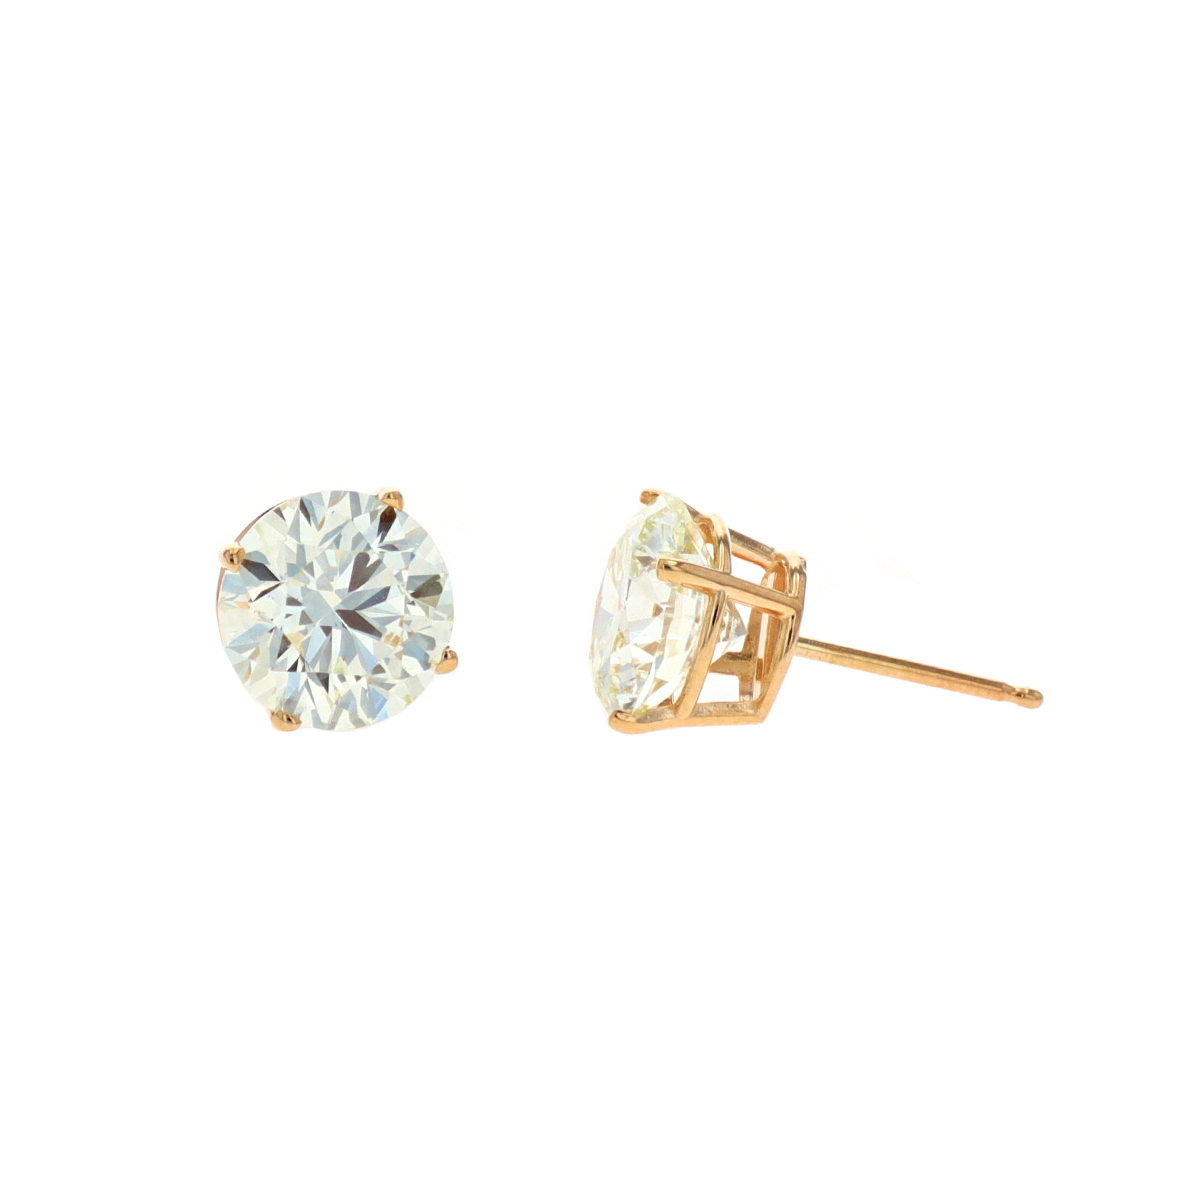 14K Yellow Gold 4.01 Carat L VS2 Diamond Earrings